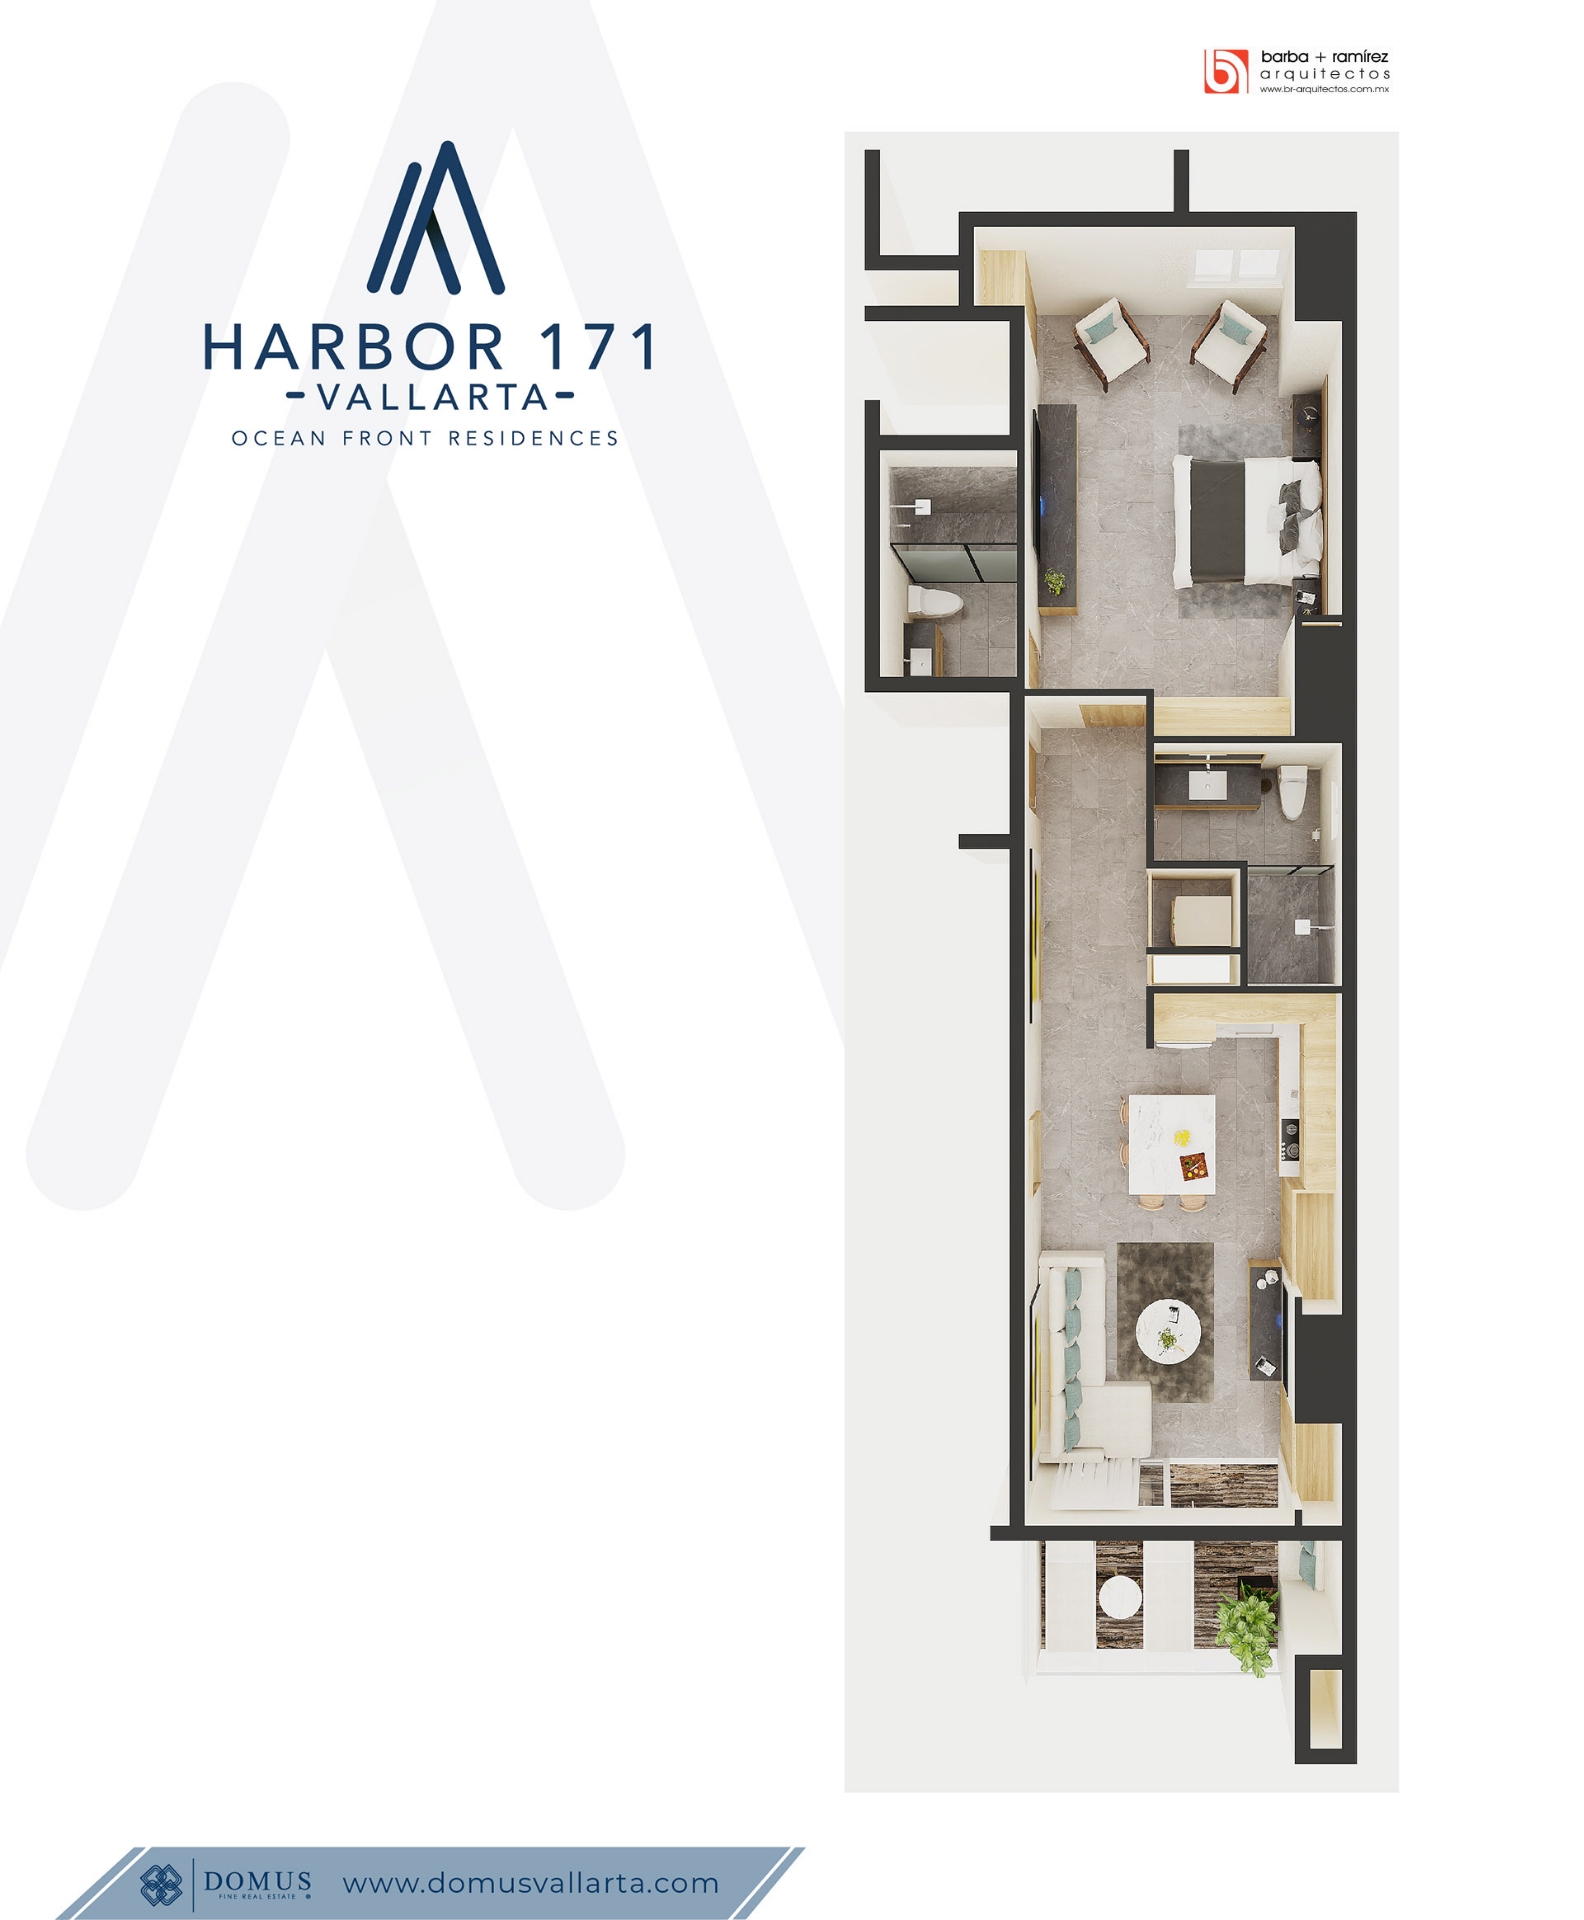 Unit 1409 Blueprint - Harbor 171